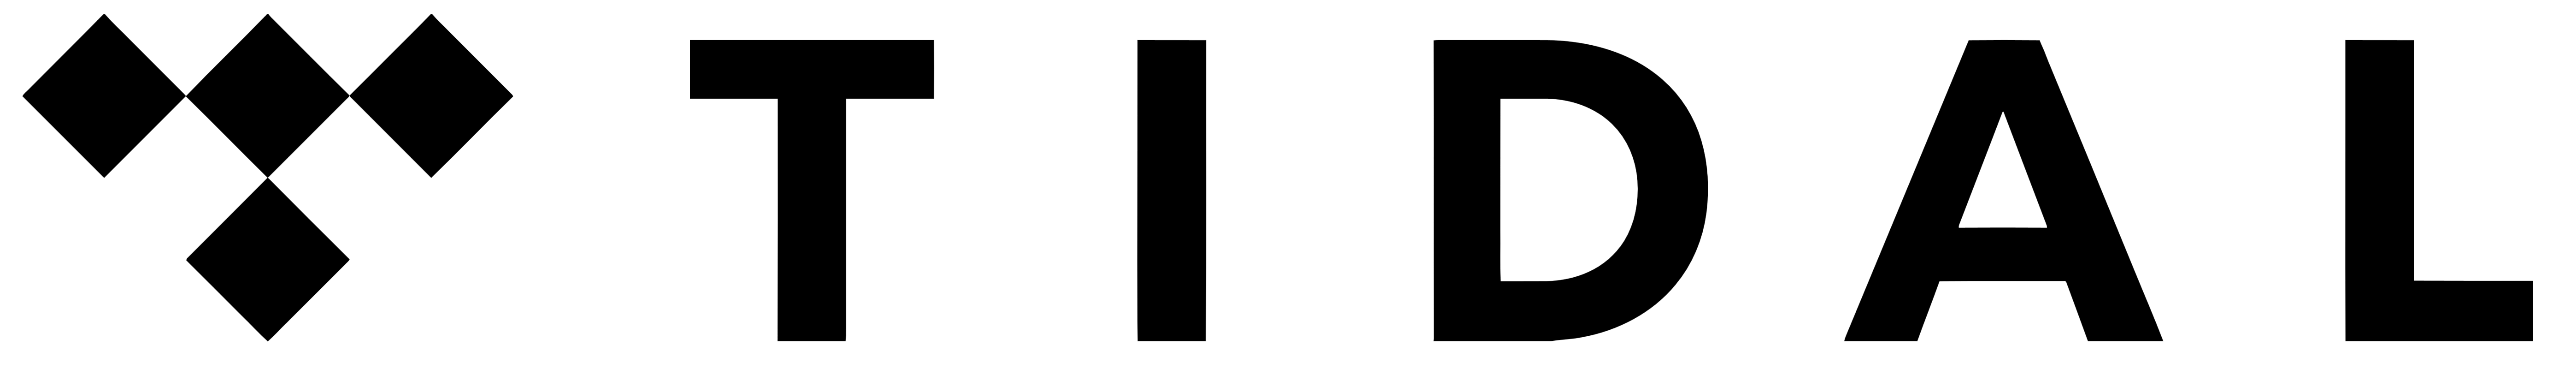 Image result for tidal logo